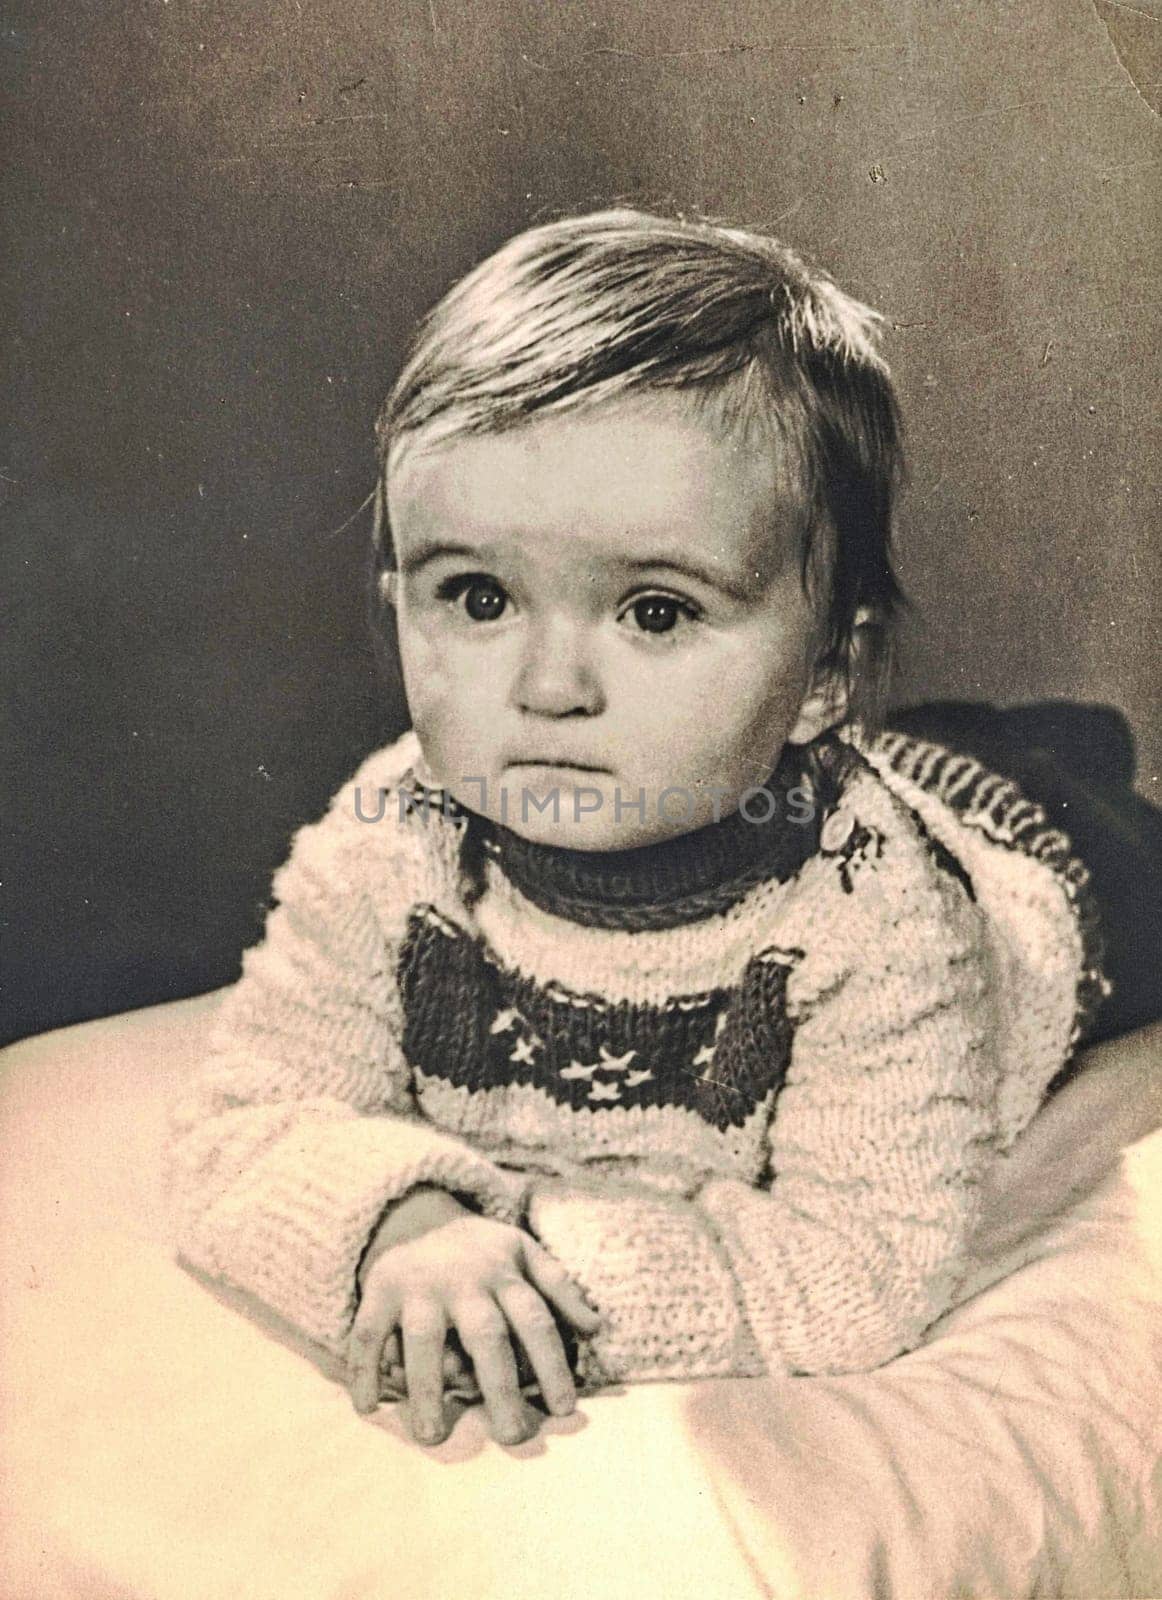 ZWICKAU, EAST GERMANY - CIRCA 1970s: The retro photo shows baby boy,circa 1 year old. Studio photo. Black and white photo.